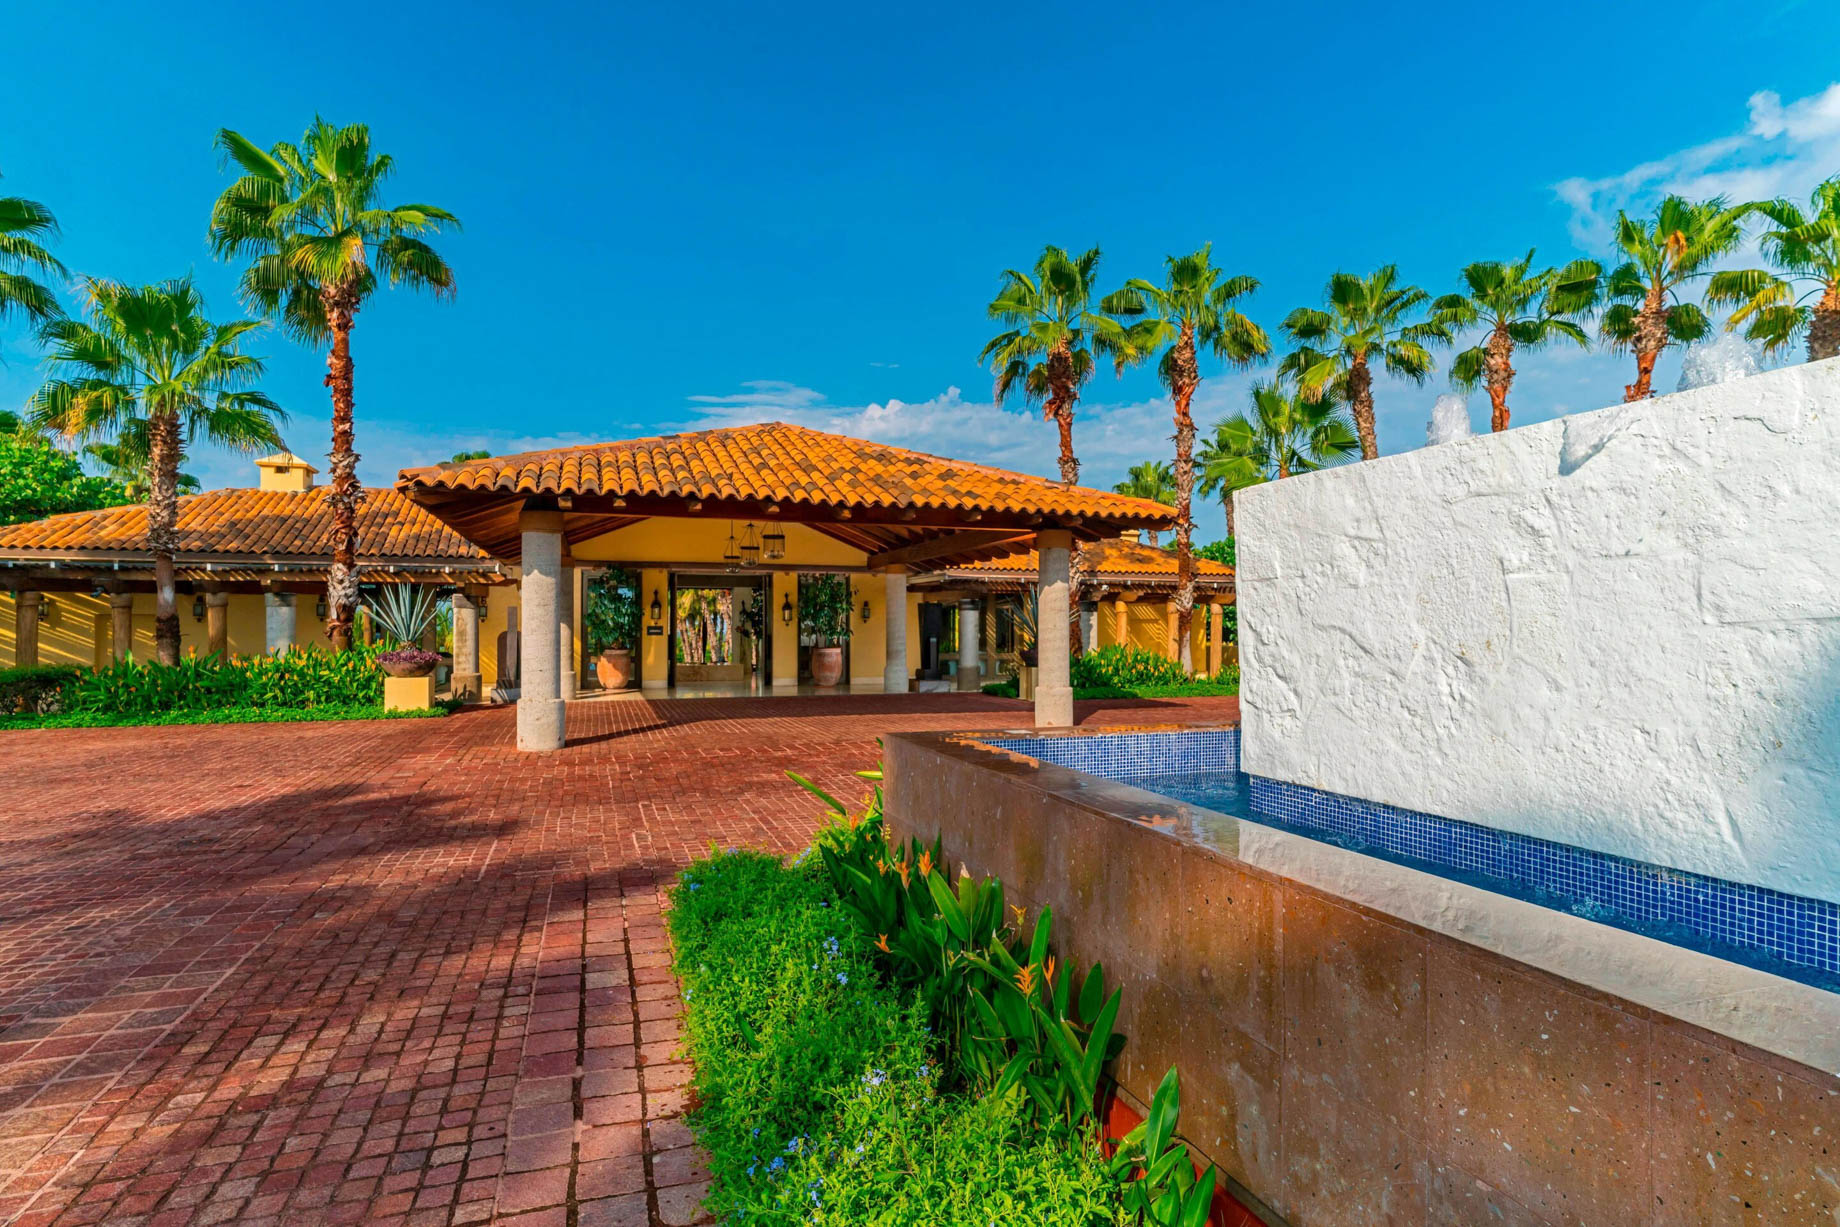 The St. Regis Punta Mita Resort – Nayarit, Mexico – Entrance